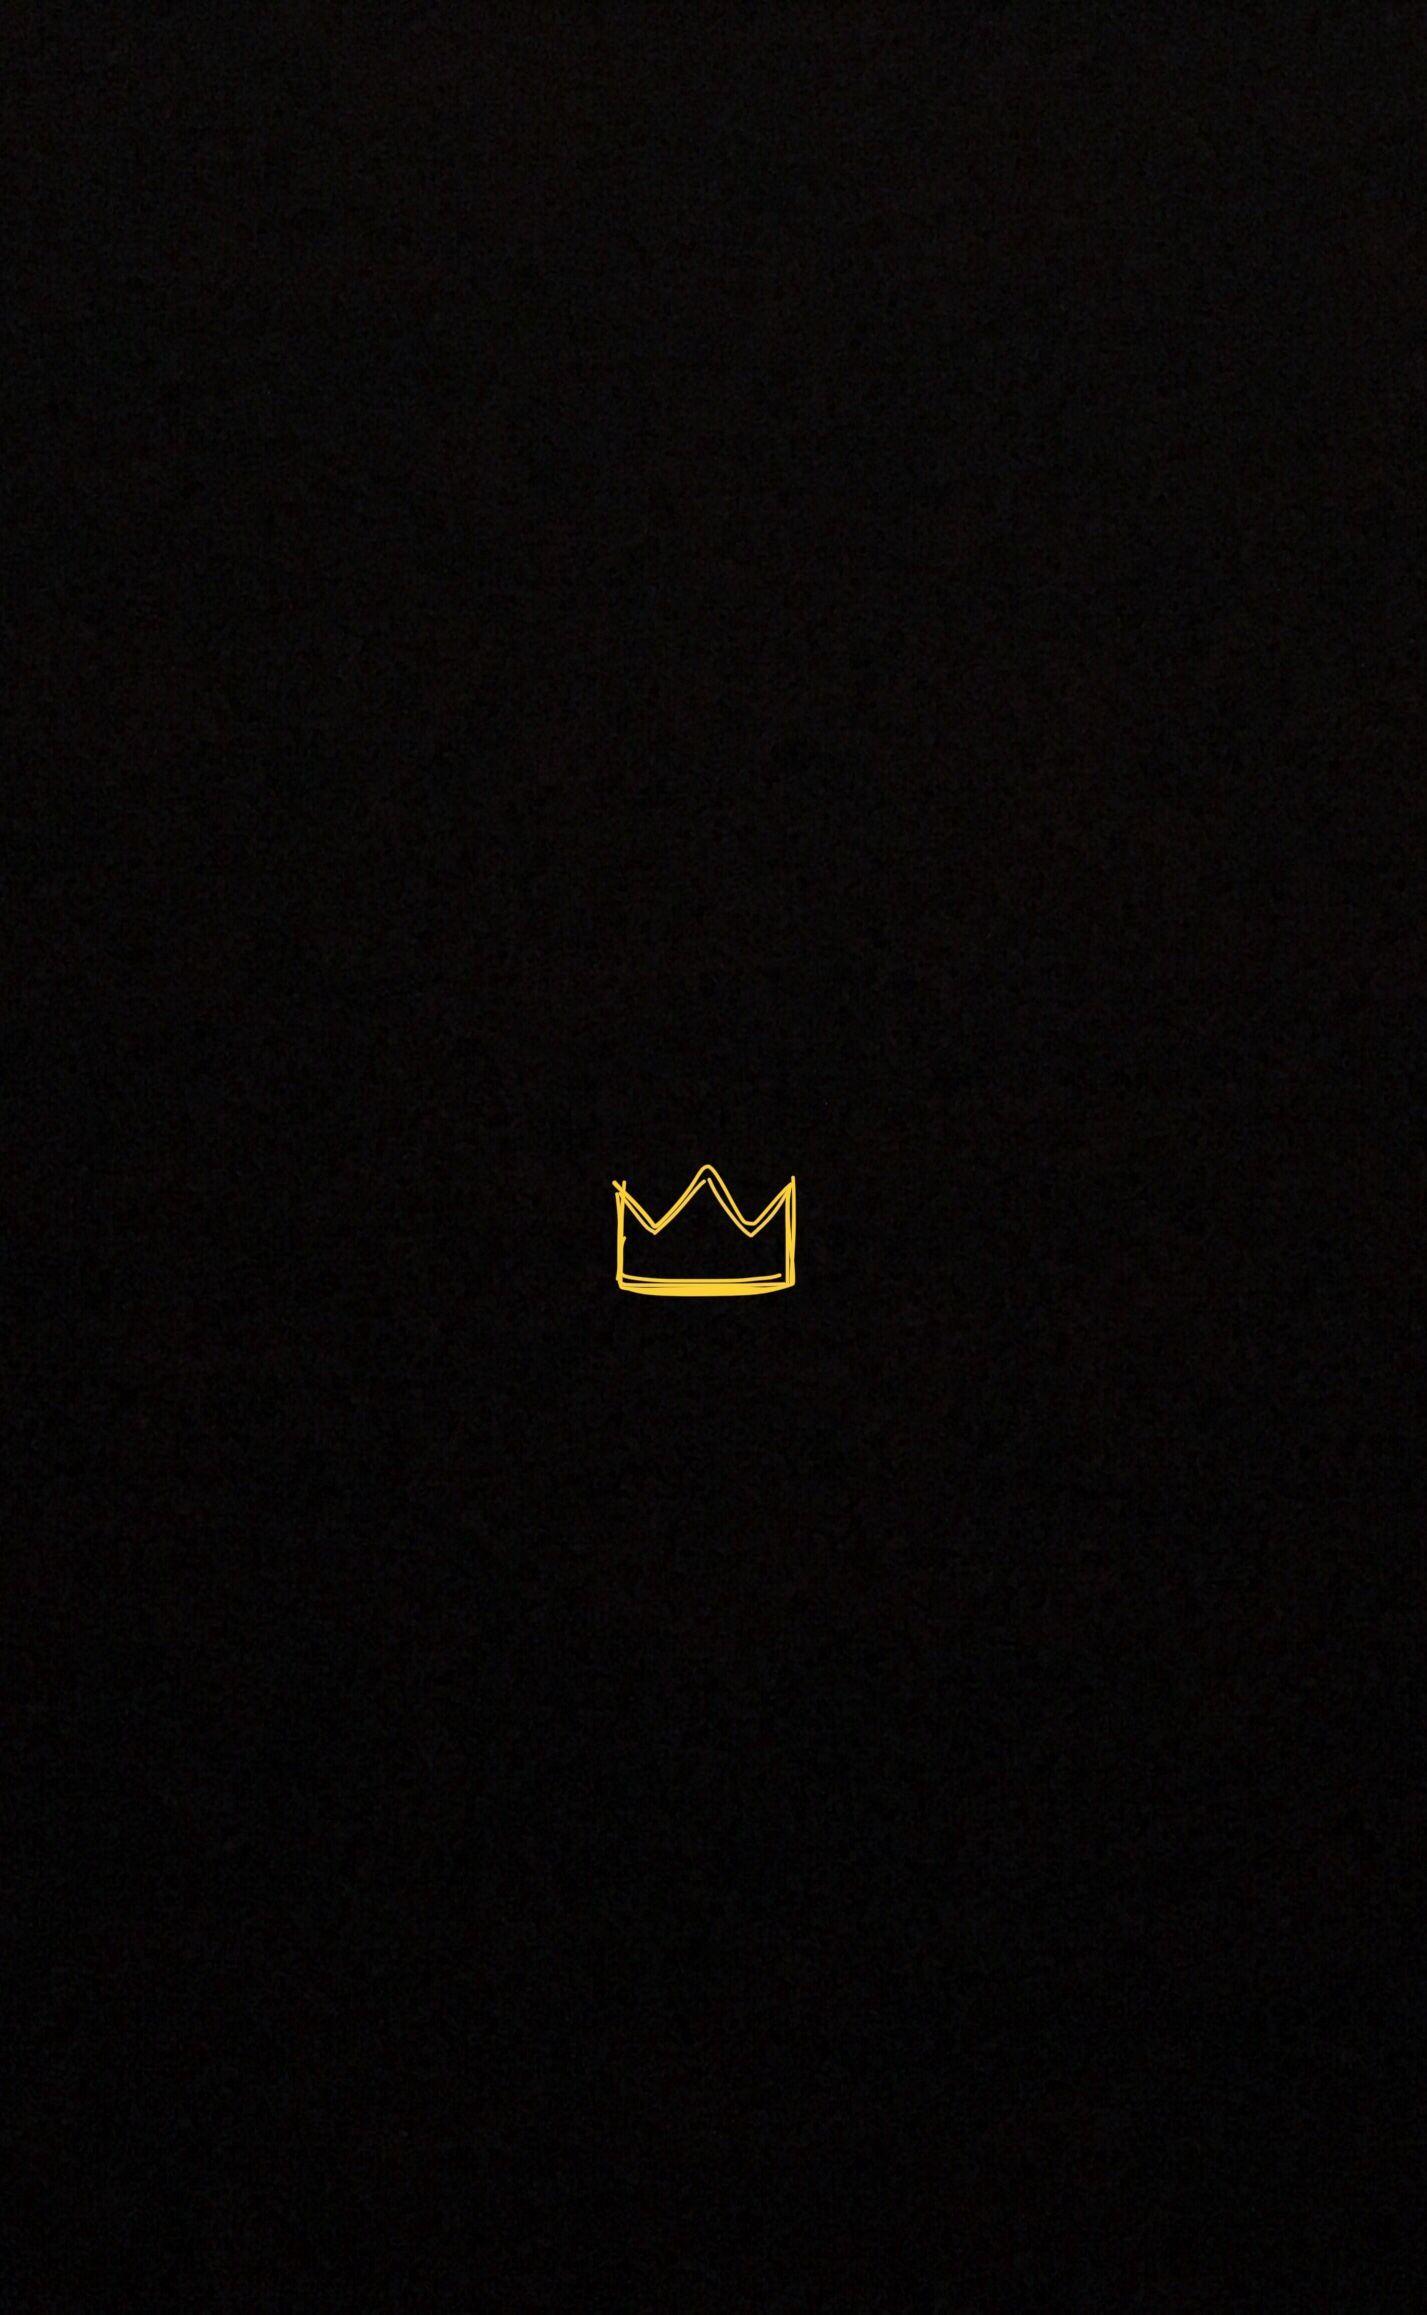 Iphone Black Queen Girly Wallpaper / Desktop background desktop background from the above